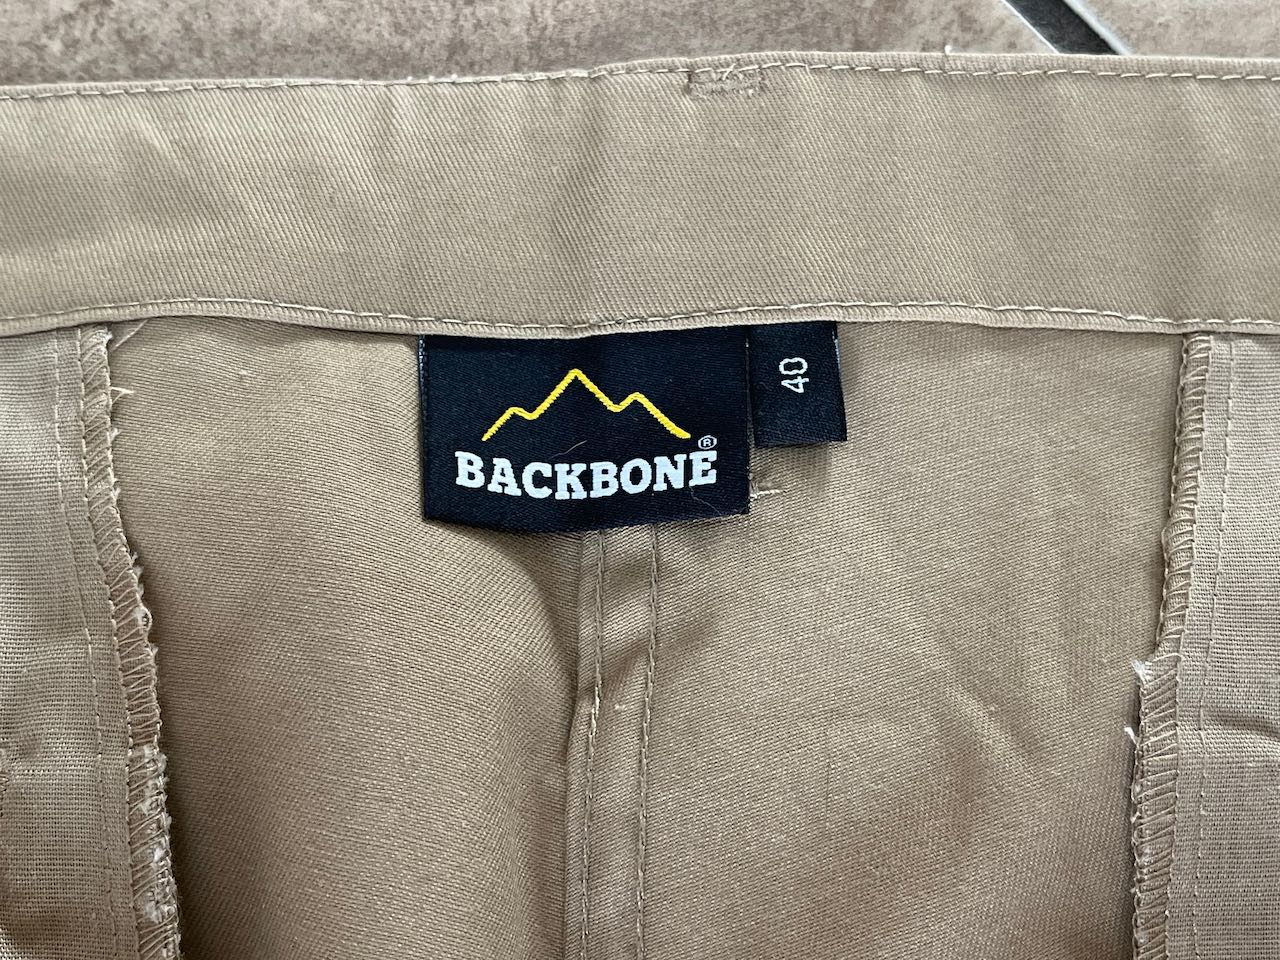 Backbone Khaki Cargo Shorts. 40 Waist---------------NWOT!